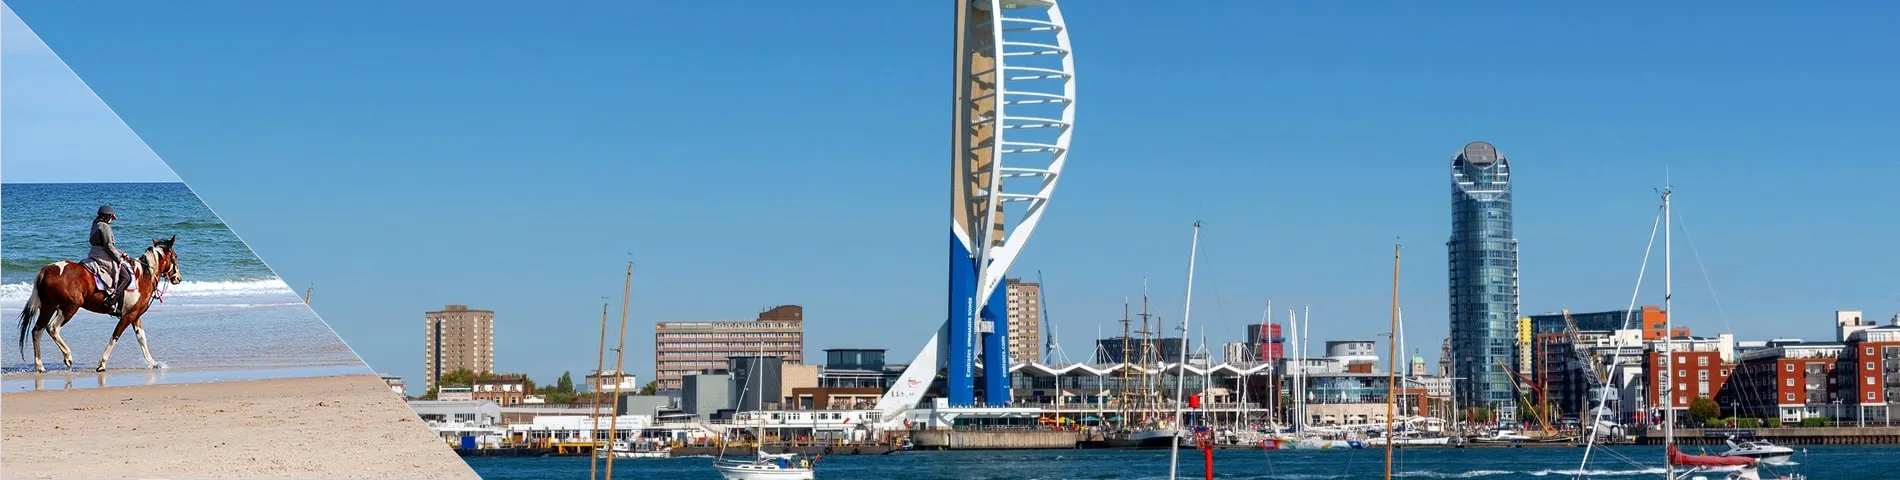 Portsmouth - Anglès i Equitació